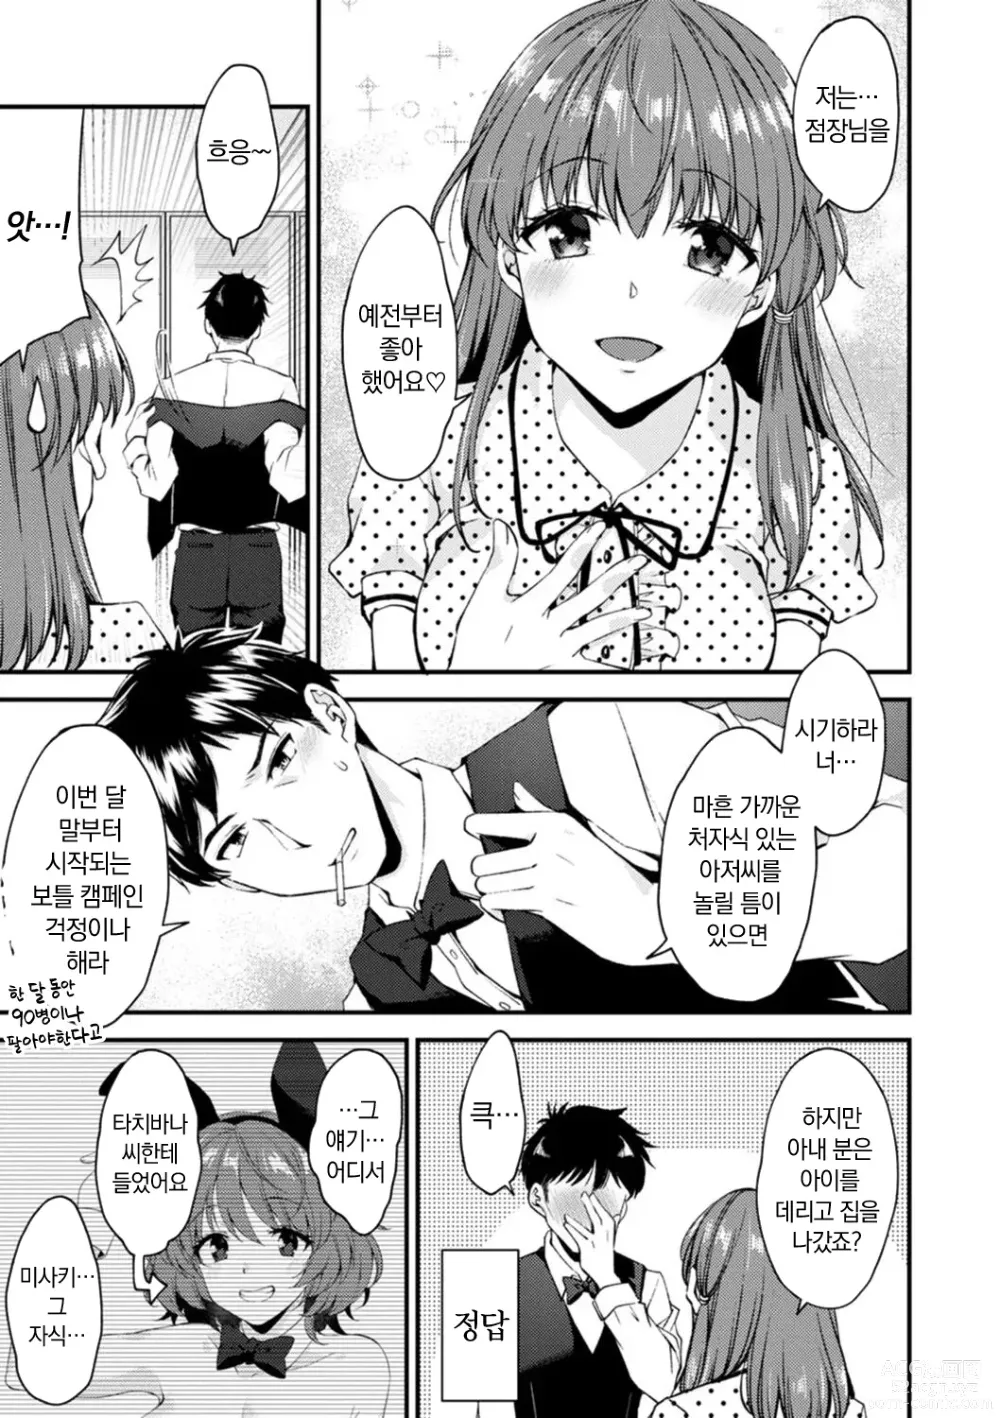 Page 25 of manga 취미가 바니걸이라니 정말이에요?